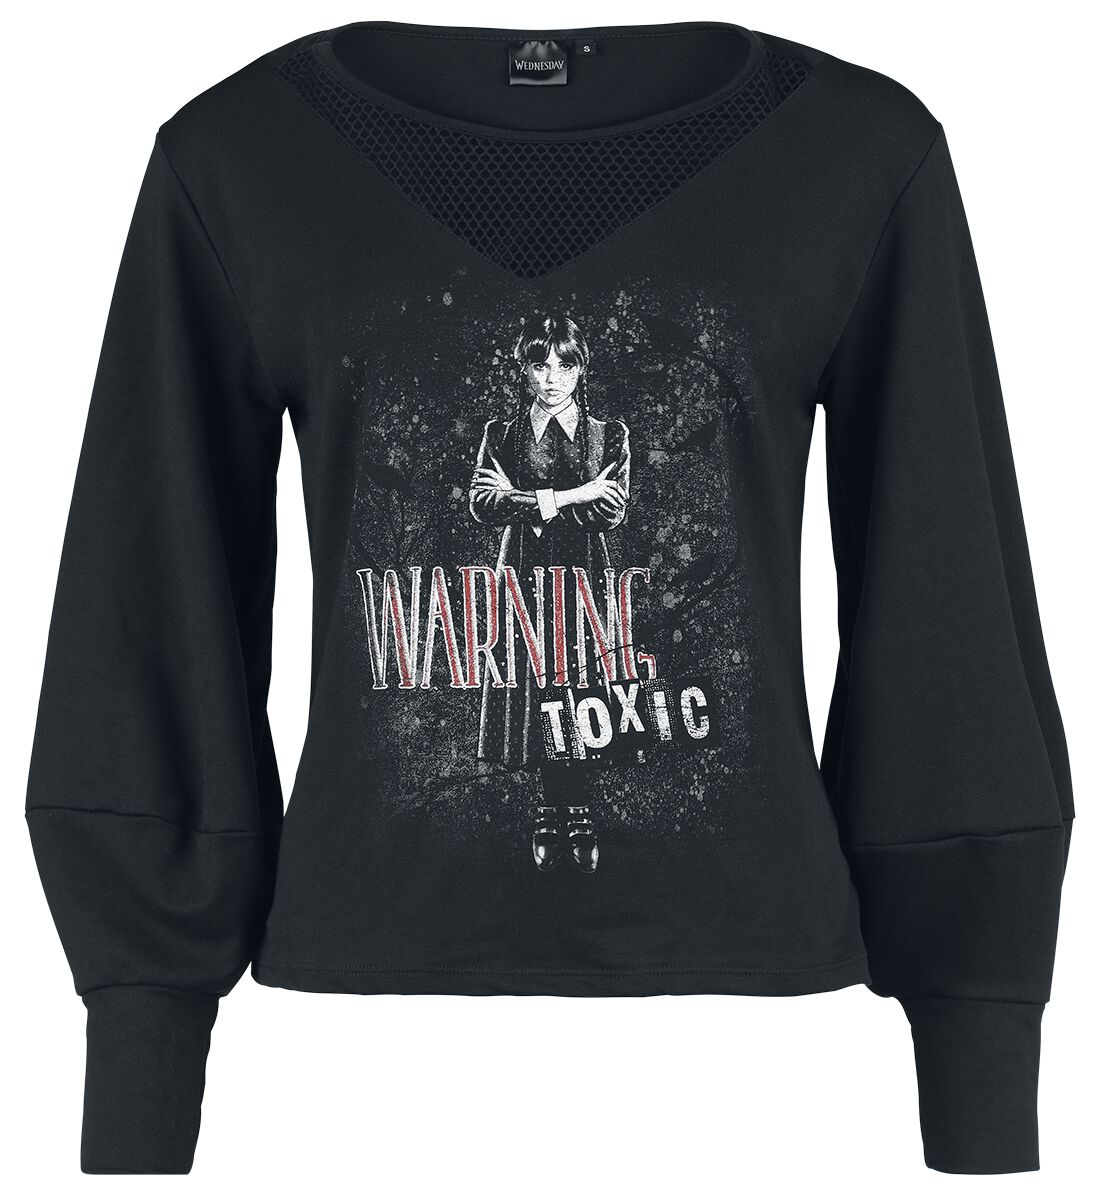 Wednesday Warning - Toxic Sweatshirt schwarz in S